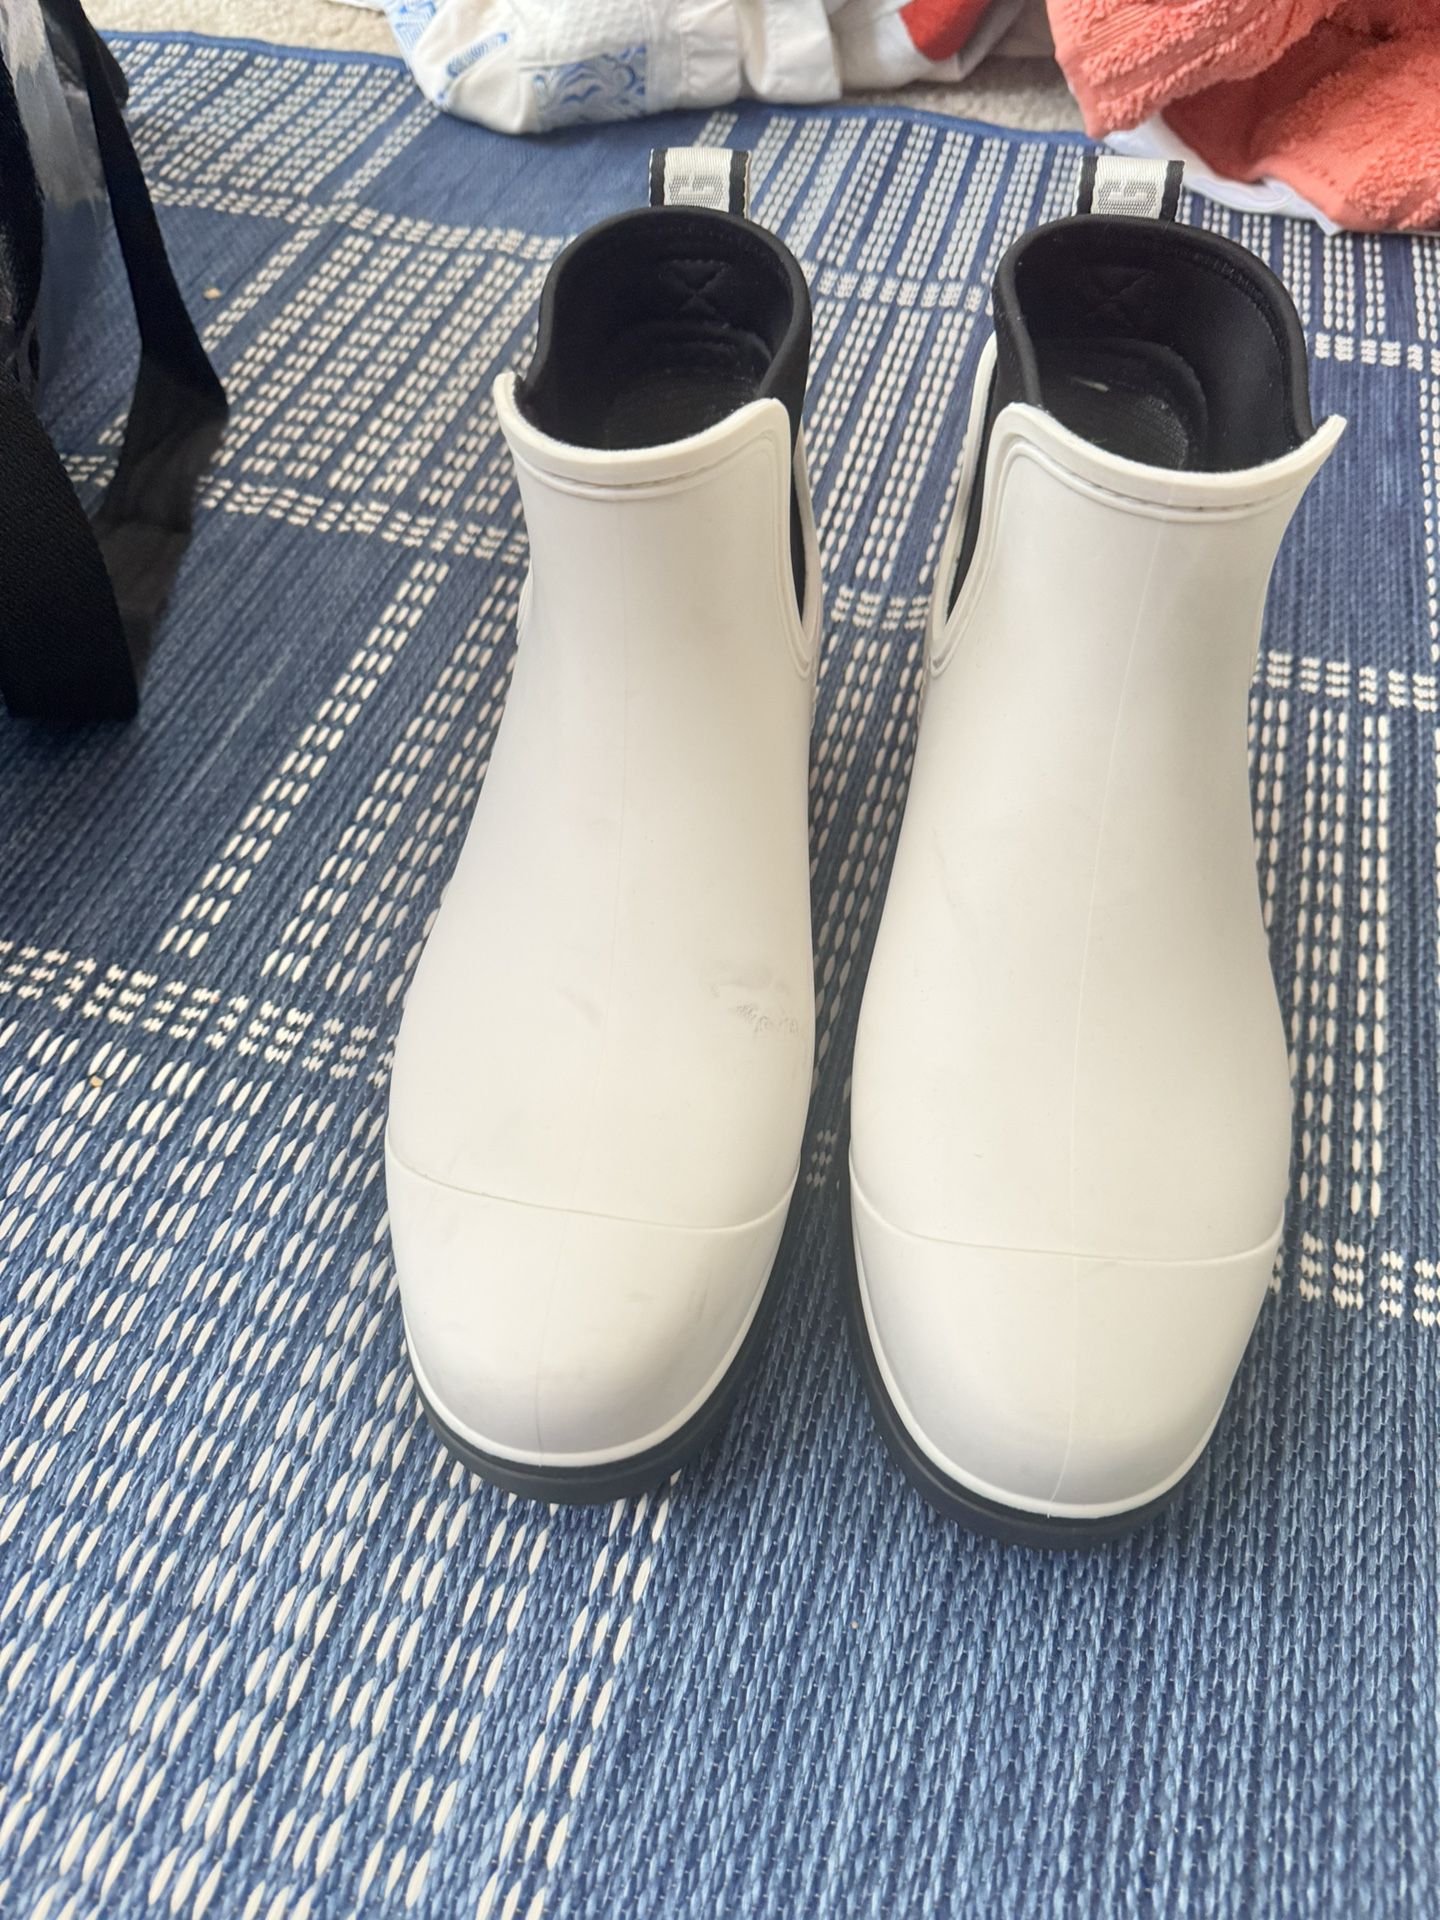 Women’s Size 11 UGG Rain Boots